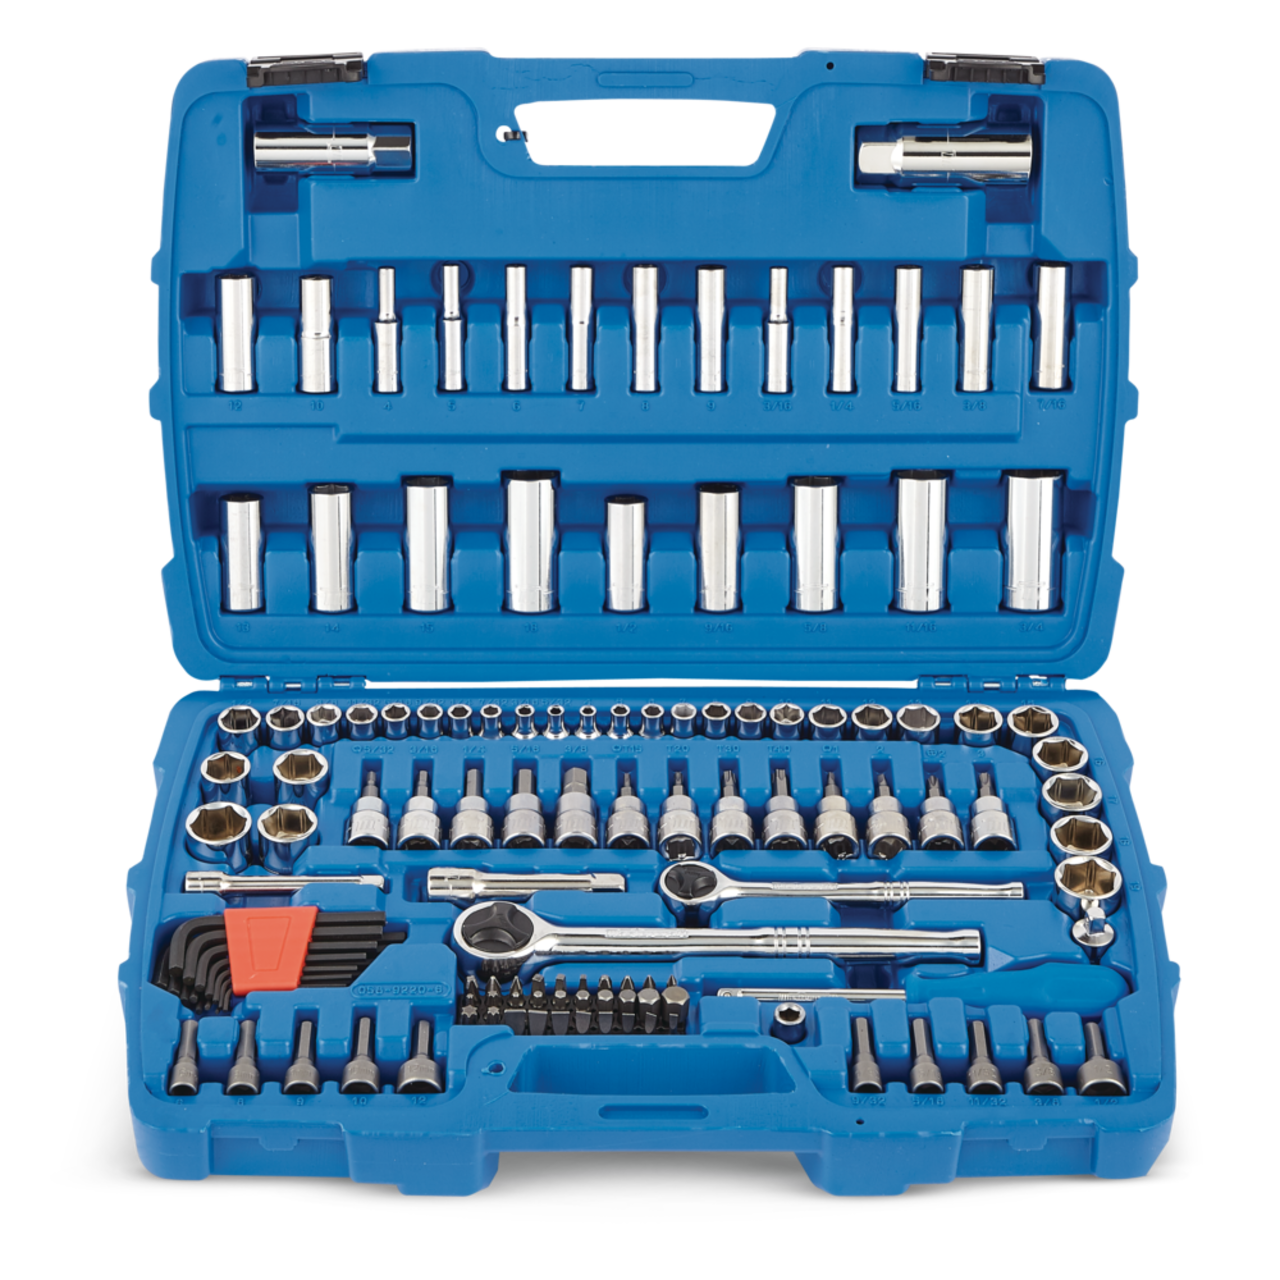 Zroof Tool Kit for Home Use Spanner Set Socket Set Wrench Kit